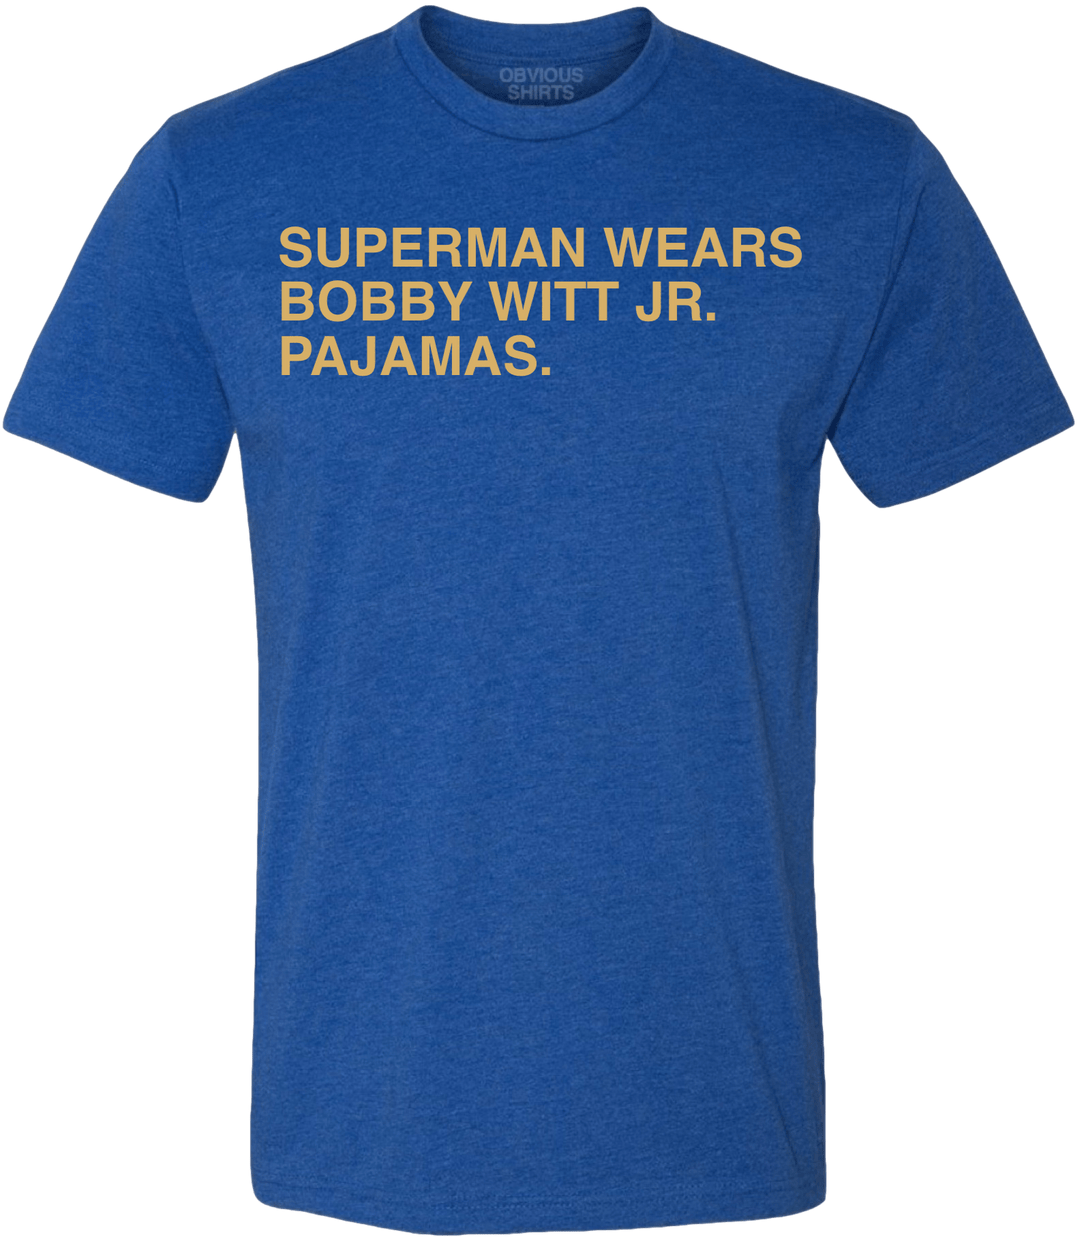 SUPERMAN WEARS BOBBY WITT JR. PAJAMAS. - OBVIOUS SHIRTS